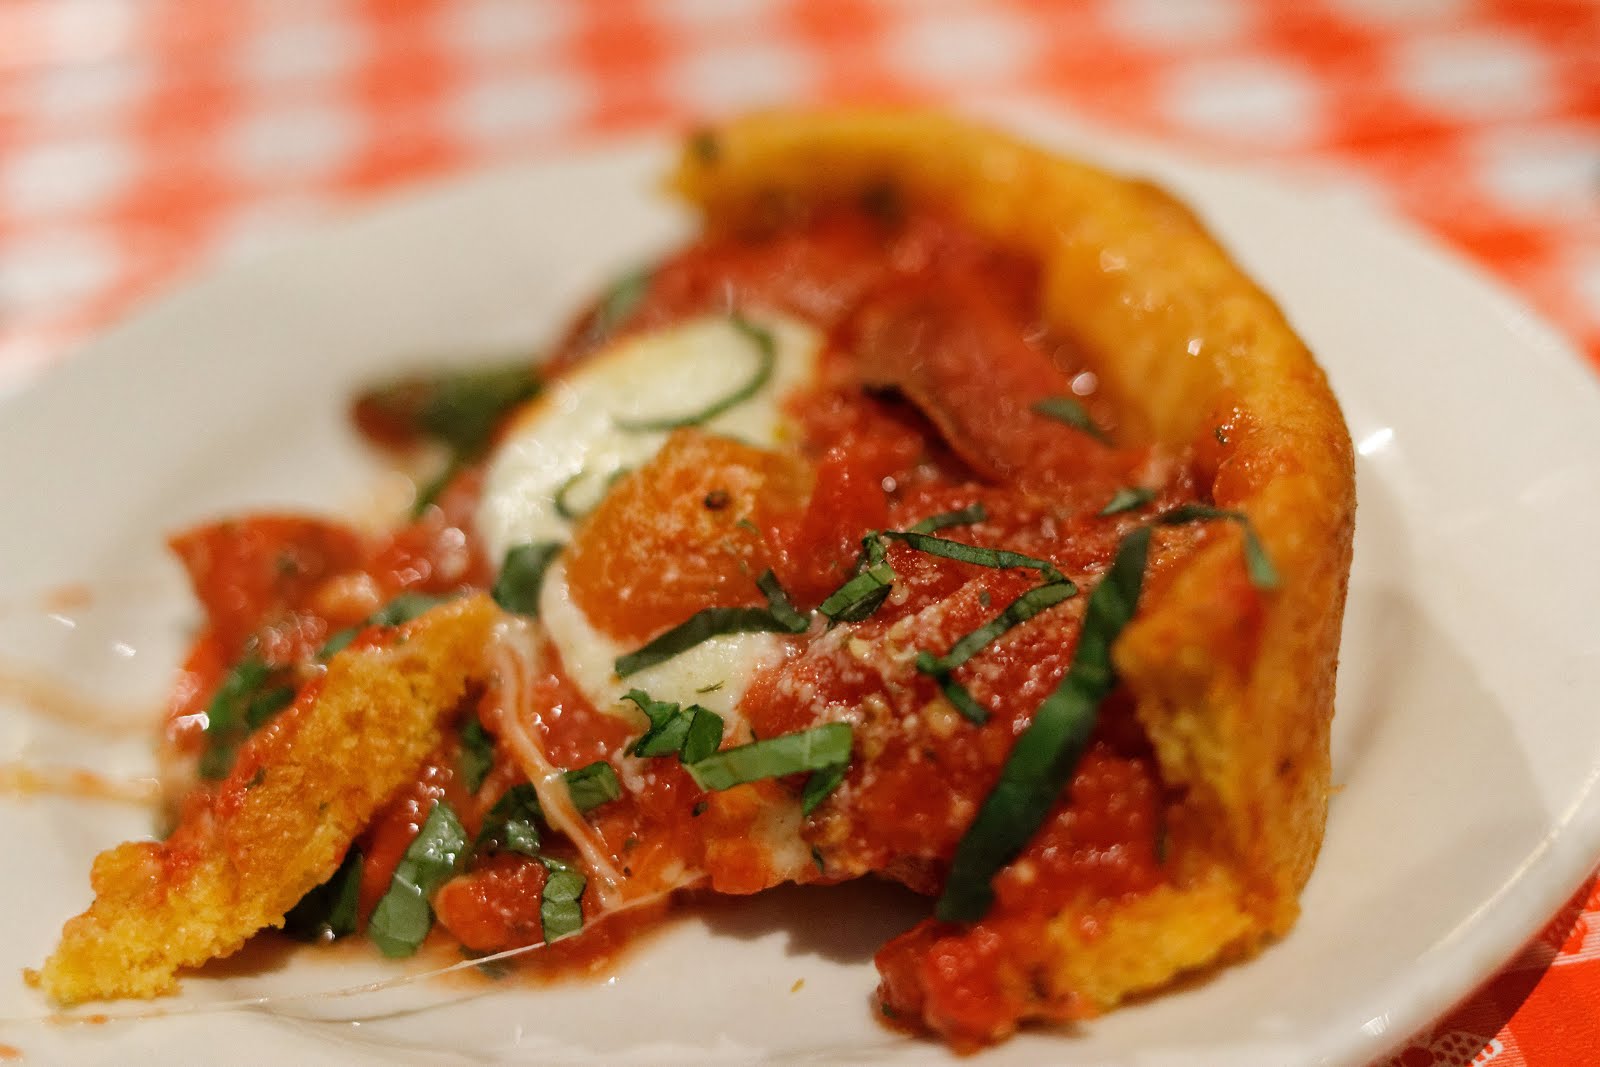 Spinach Mozzarella pizza with extra garlic and pepperoni at Gino's East (162 E Superior St, Chicago, IL 60611).